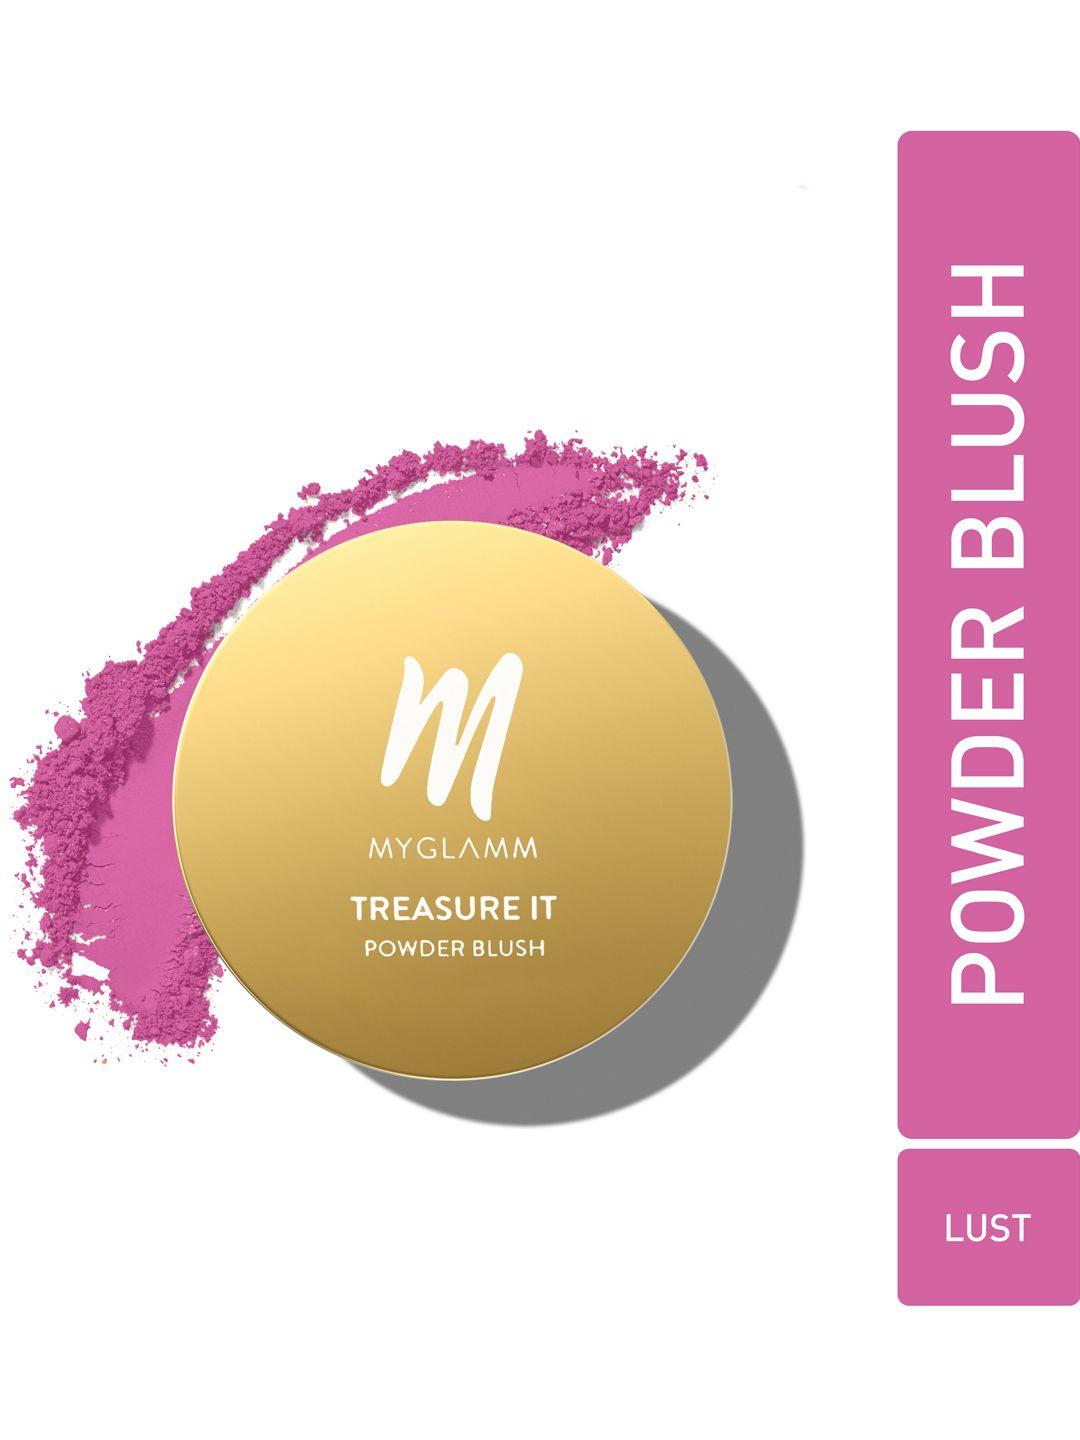 myglamm treasure it lightweight & buildable powder matte blush with vitamin e 4g - lust